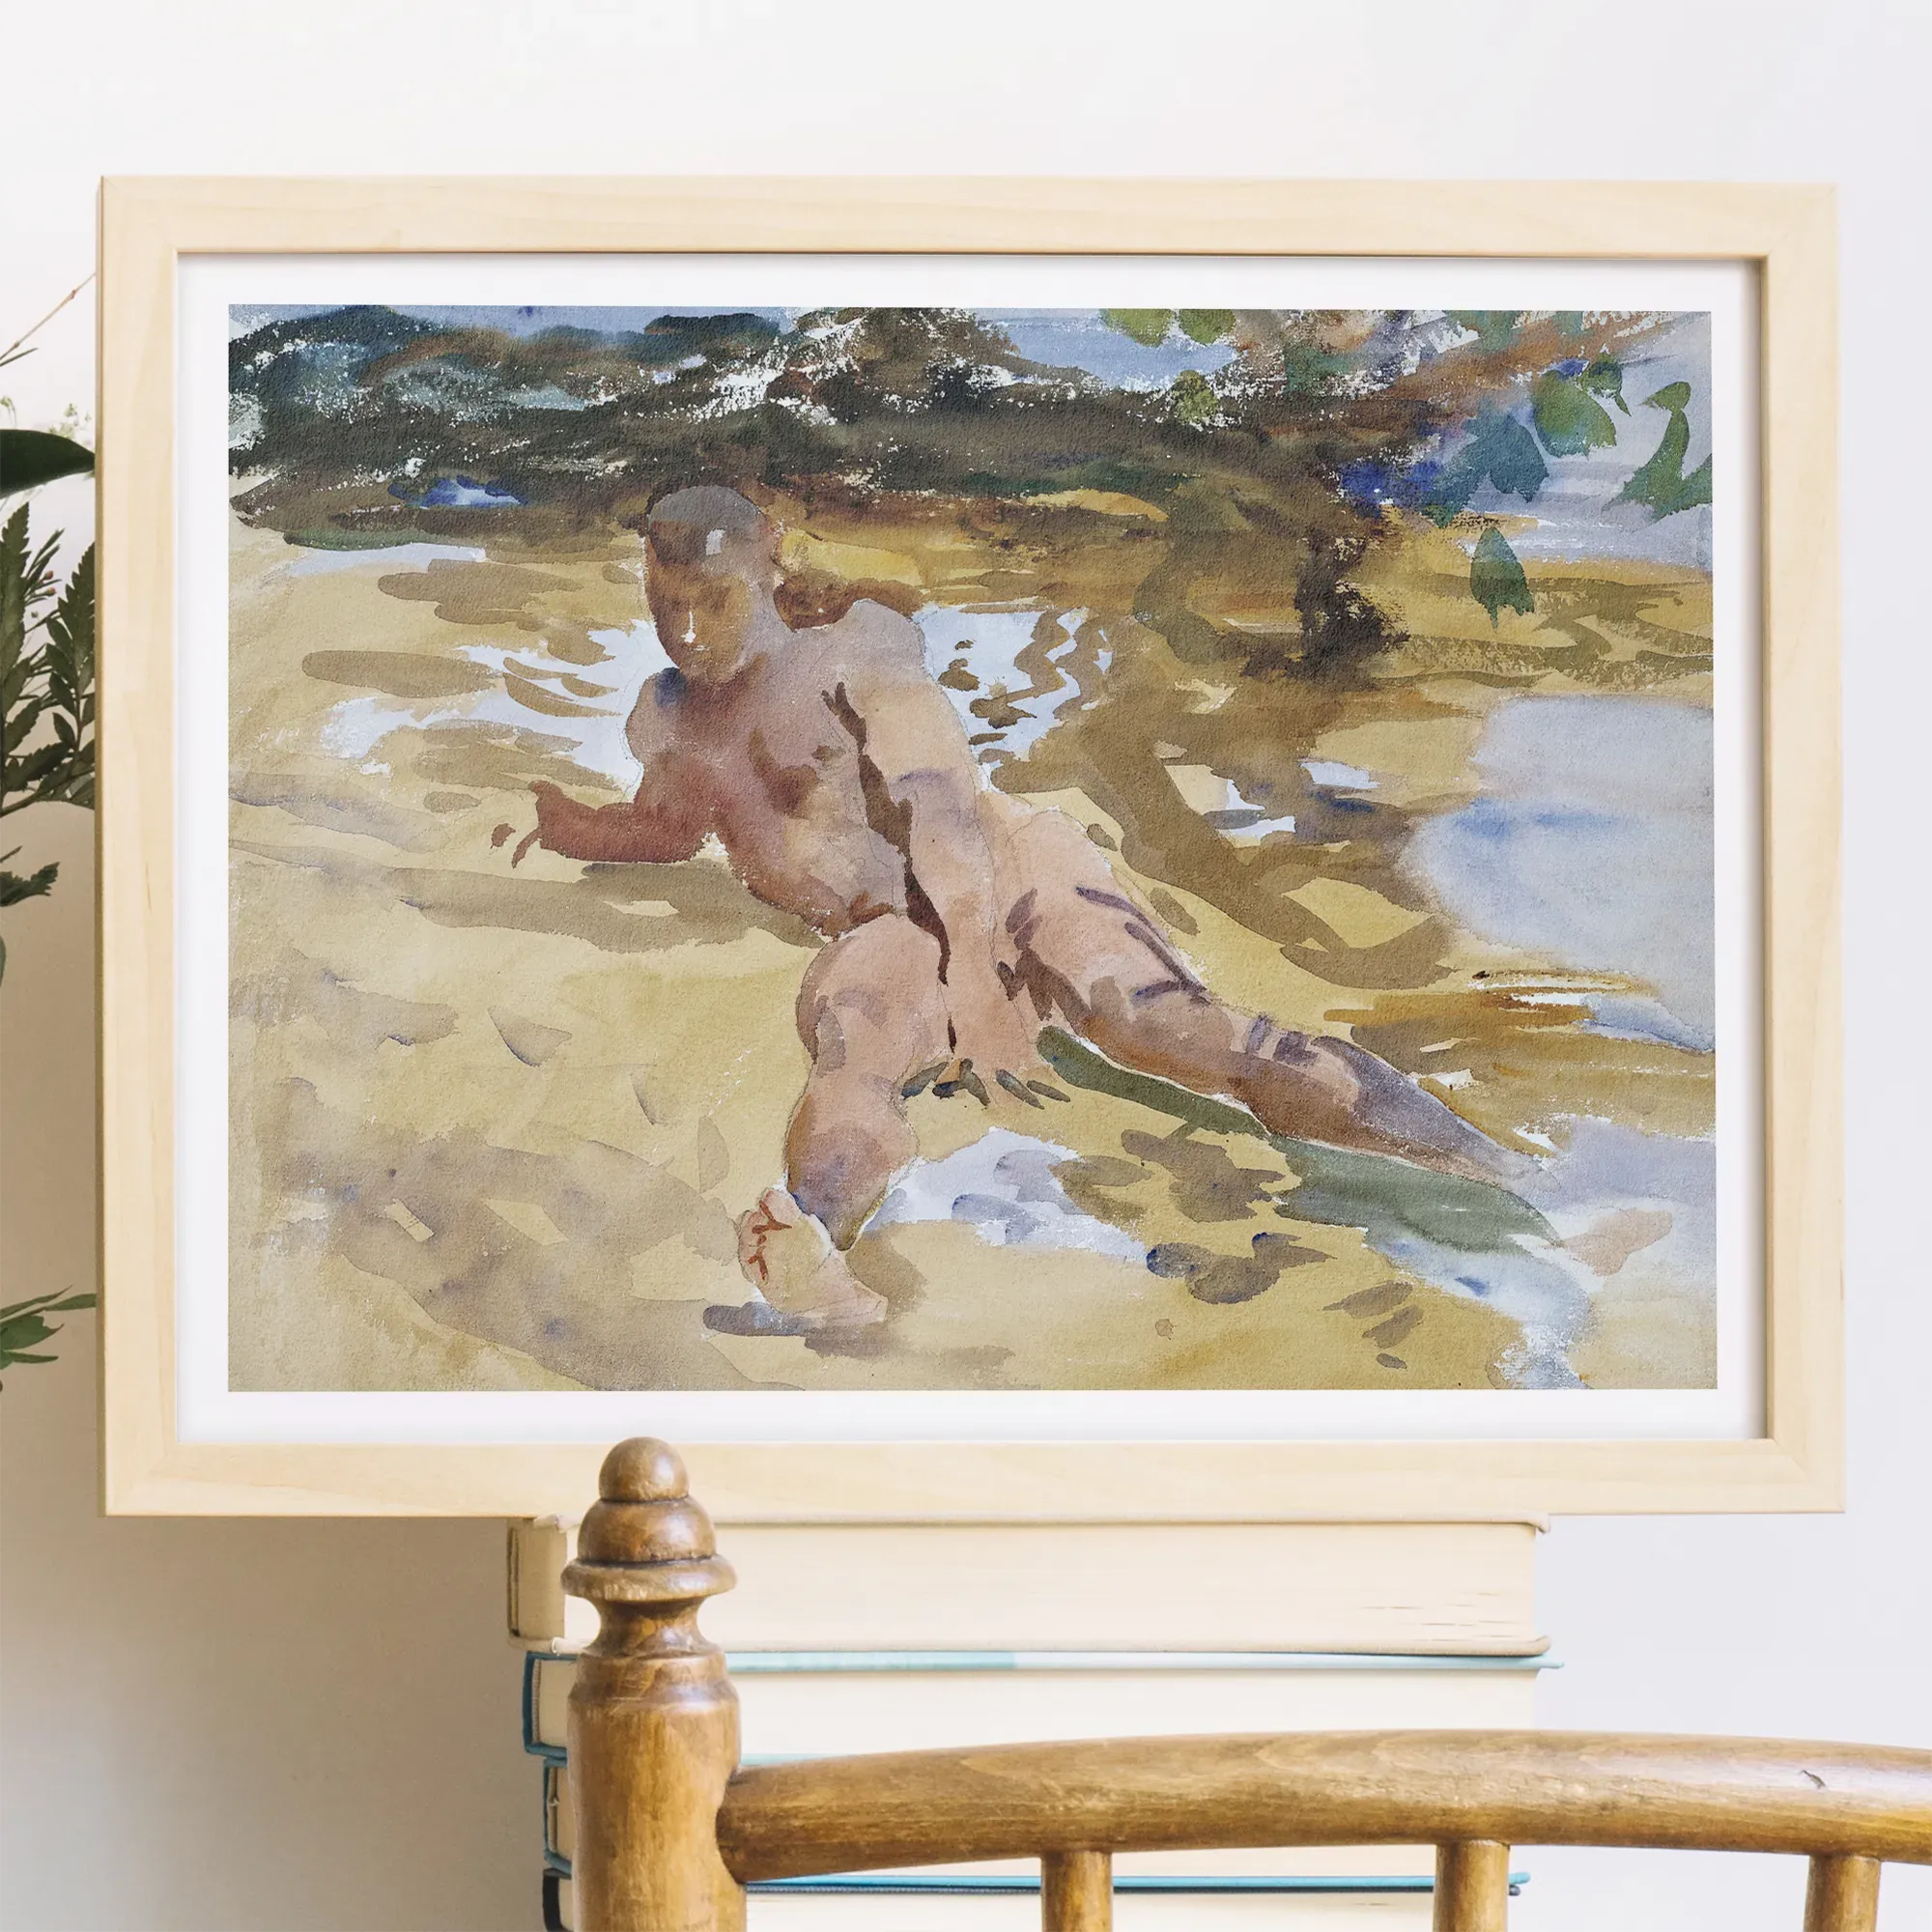 Man On Beach - John Singer Sargent Nude Art Print - Posters Prints & Visual Artwork - Aesthetic Art